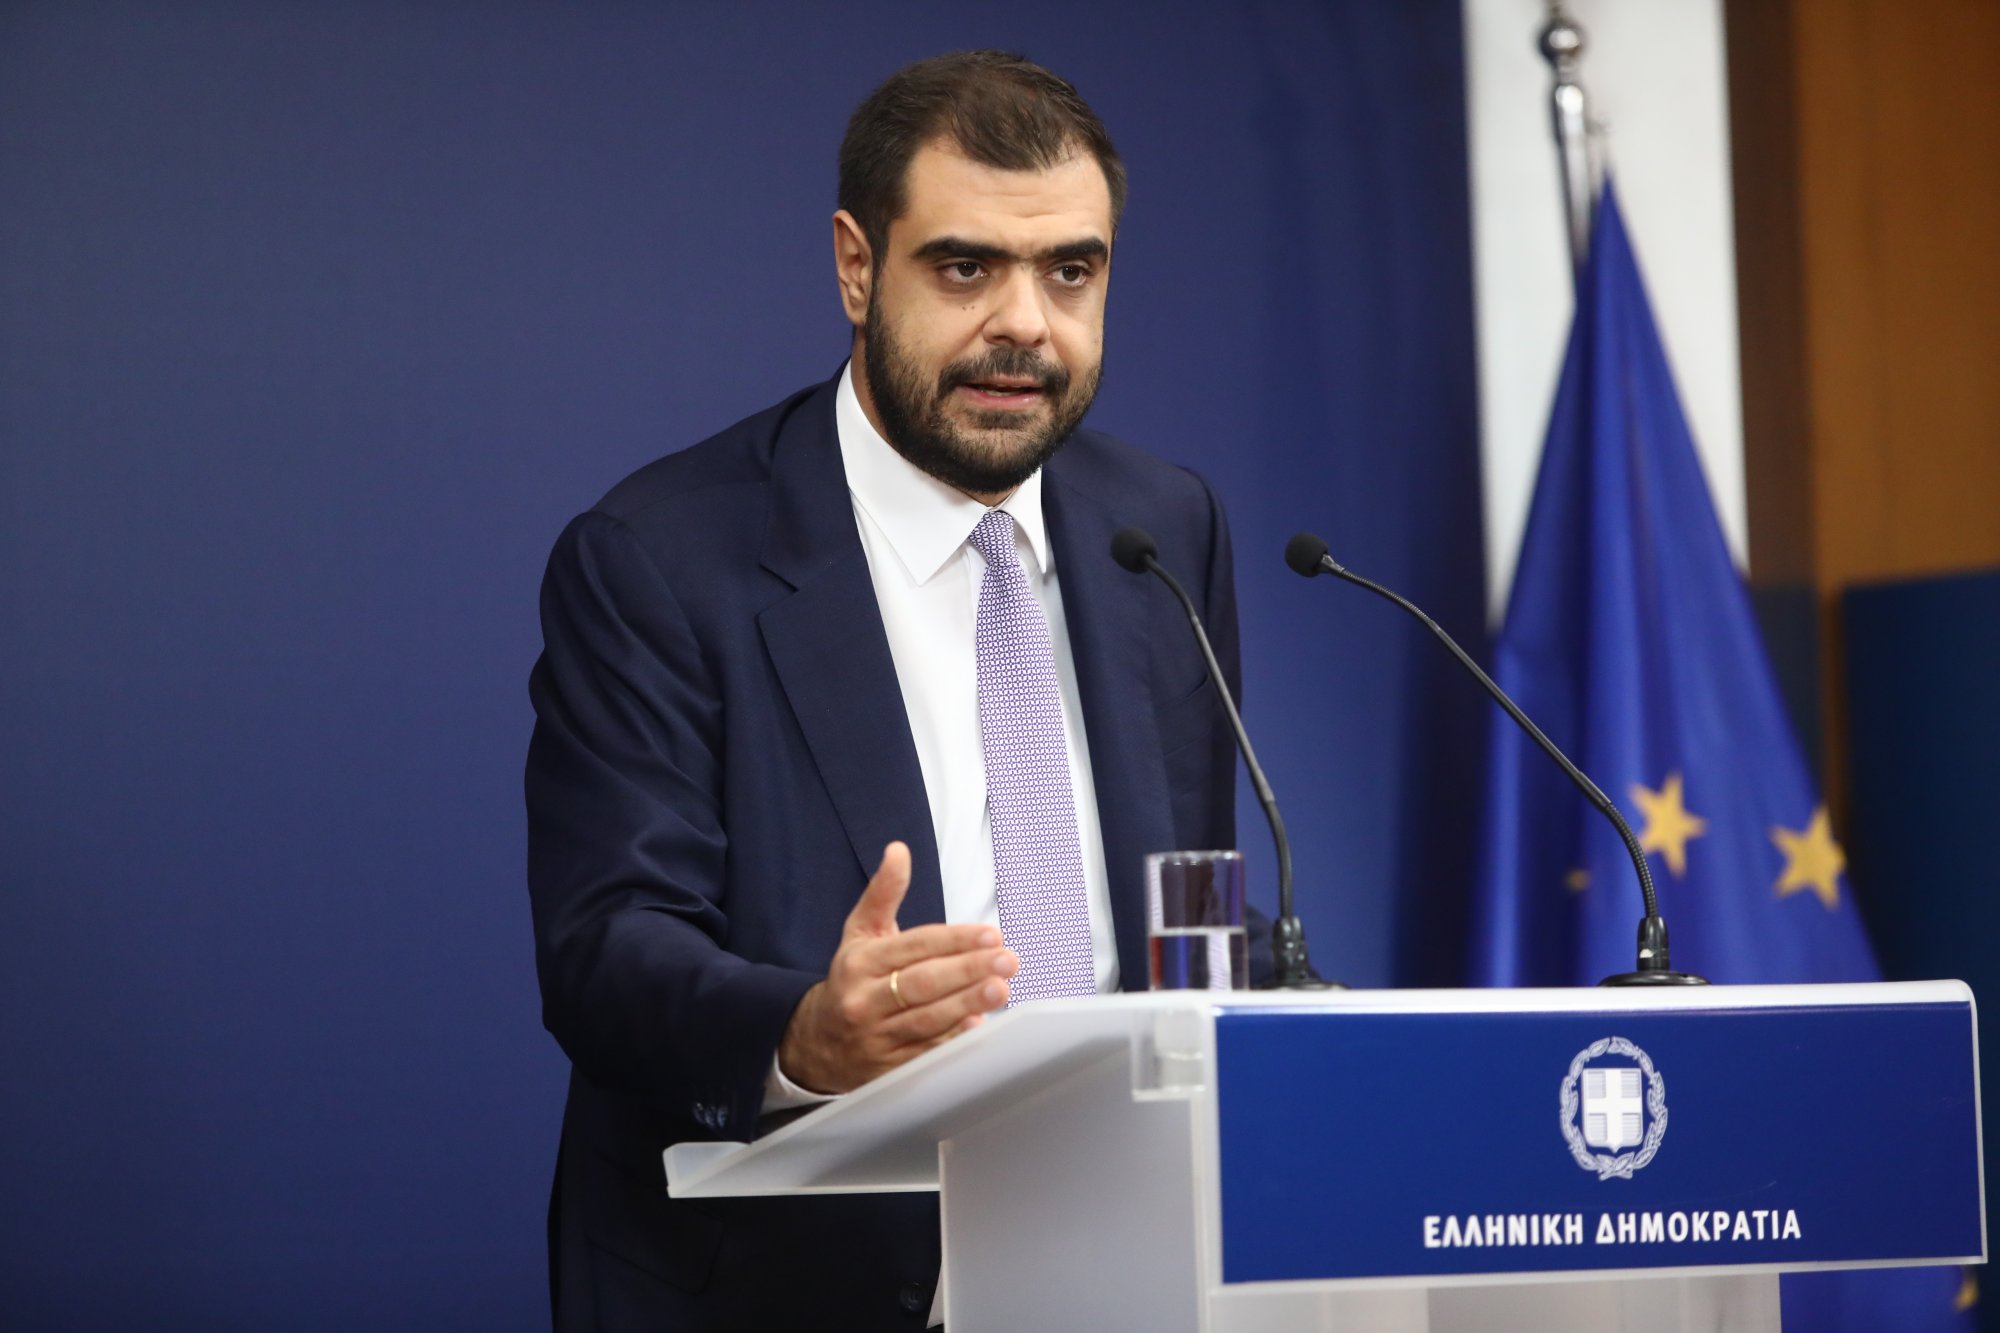 Gvt Spox: “Greece is fully prepared”